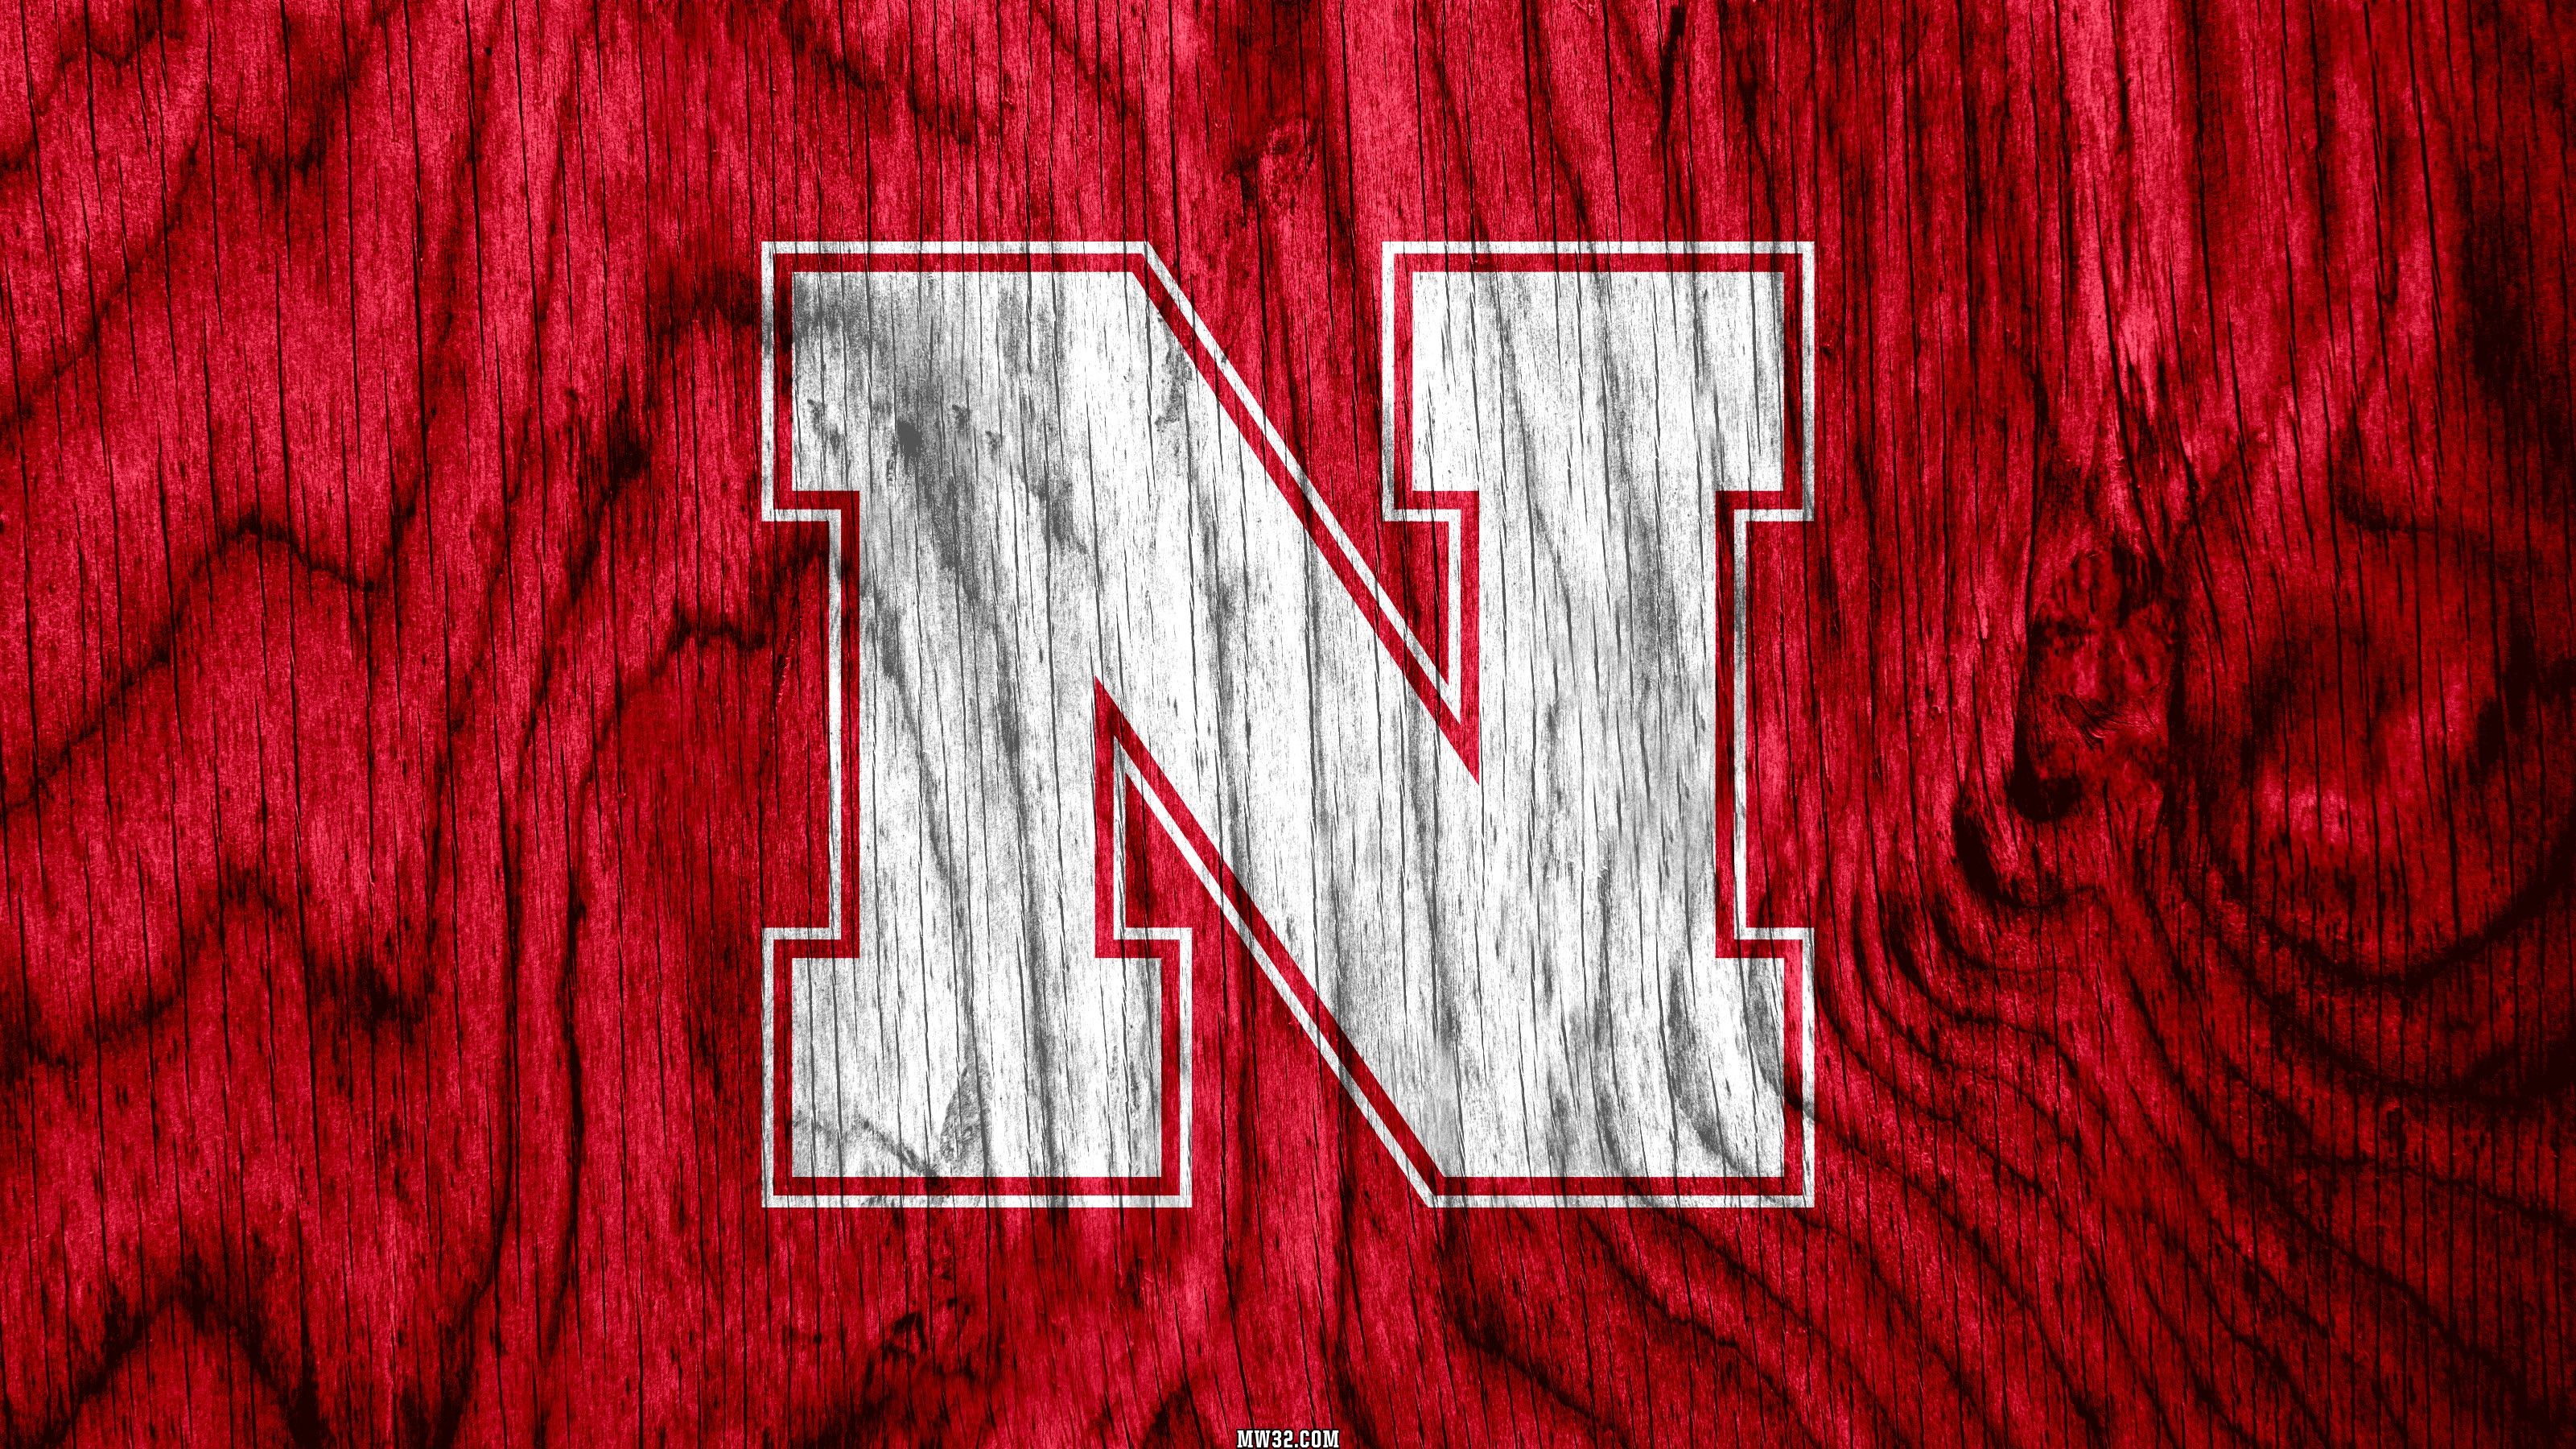 Nebraska Cornhuskers iPhone Wallpaper Image